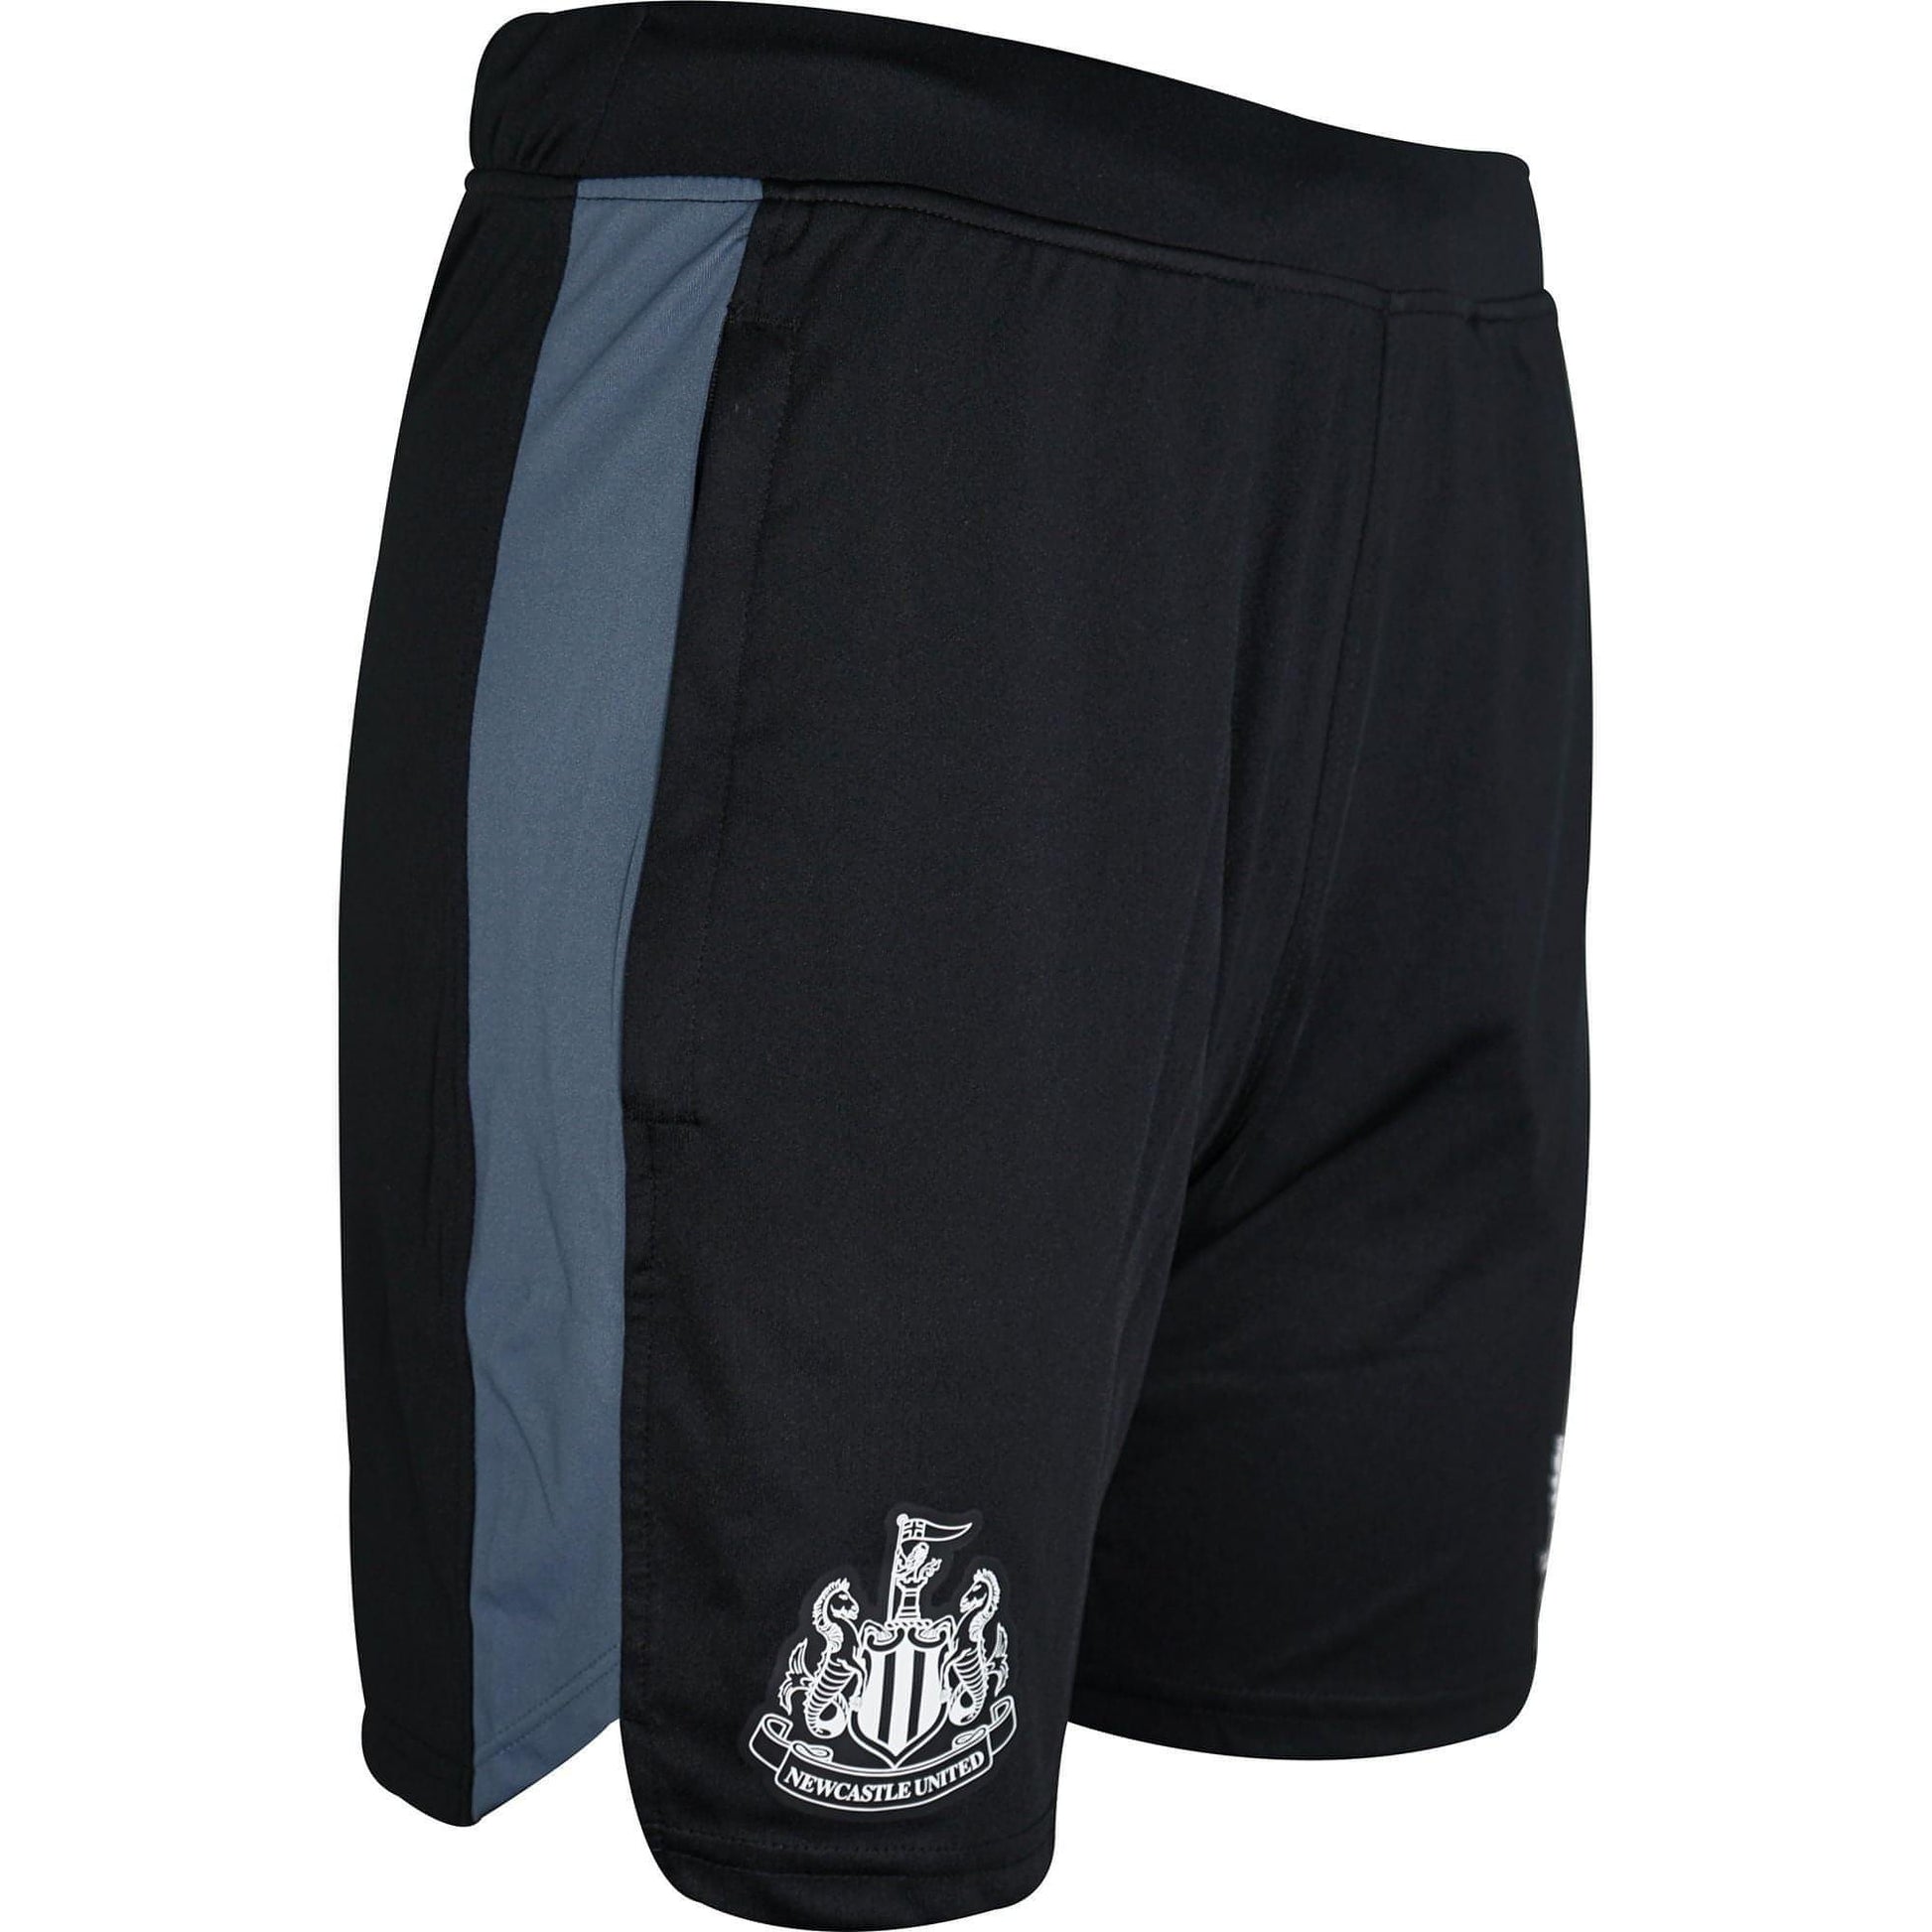 Castore Newcastle United Training Shorts Tm0937 Black Side - Side View